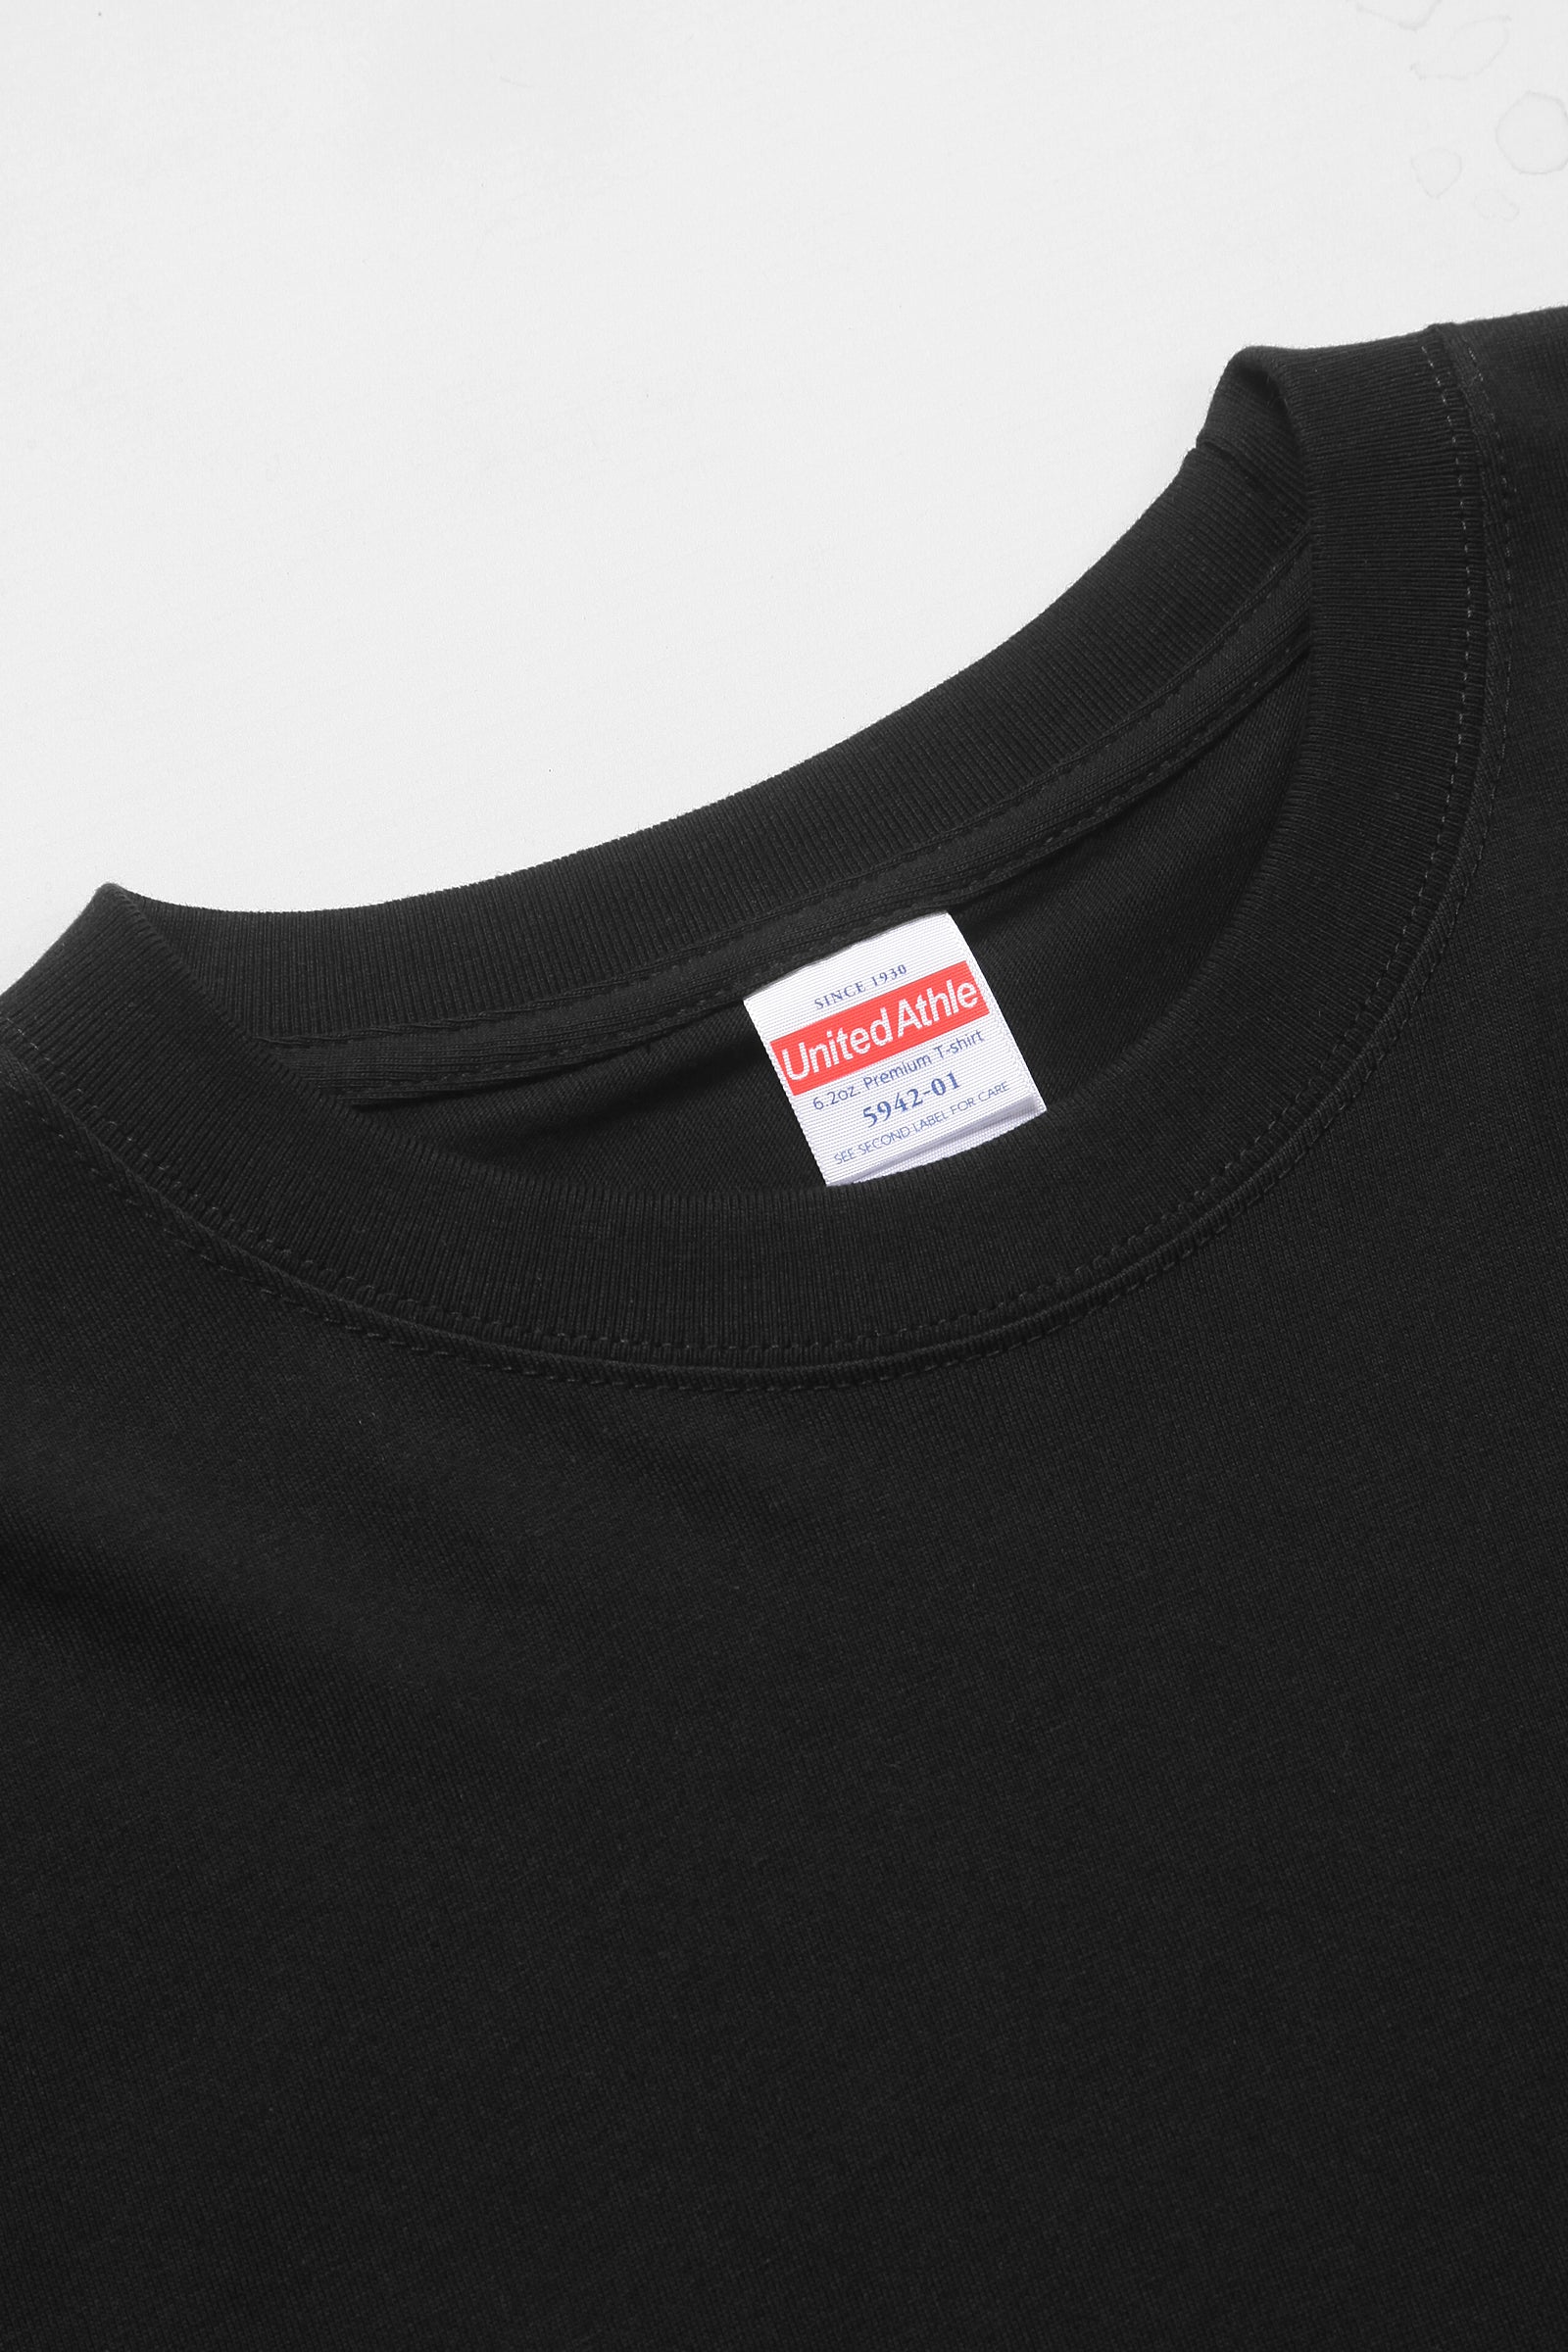 United Athle - 5942 6.2oz Premium T-Shirt - Black